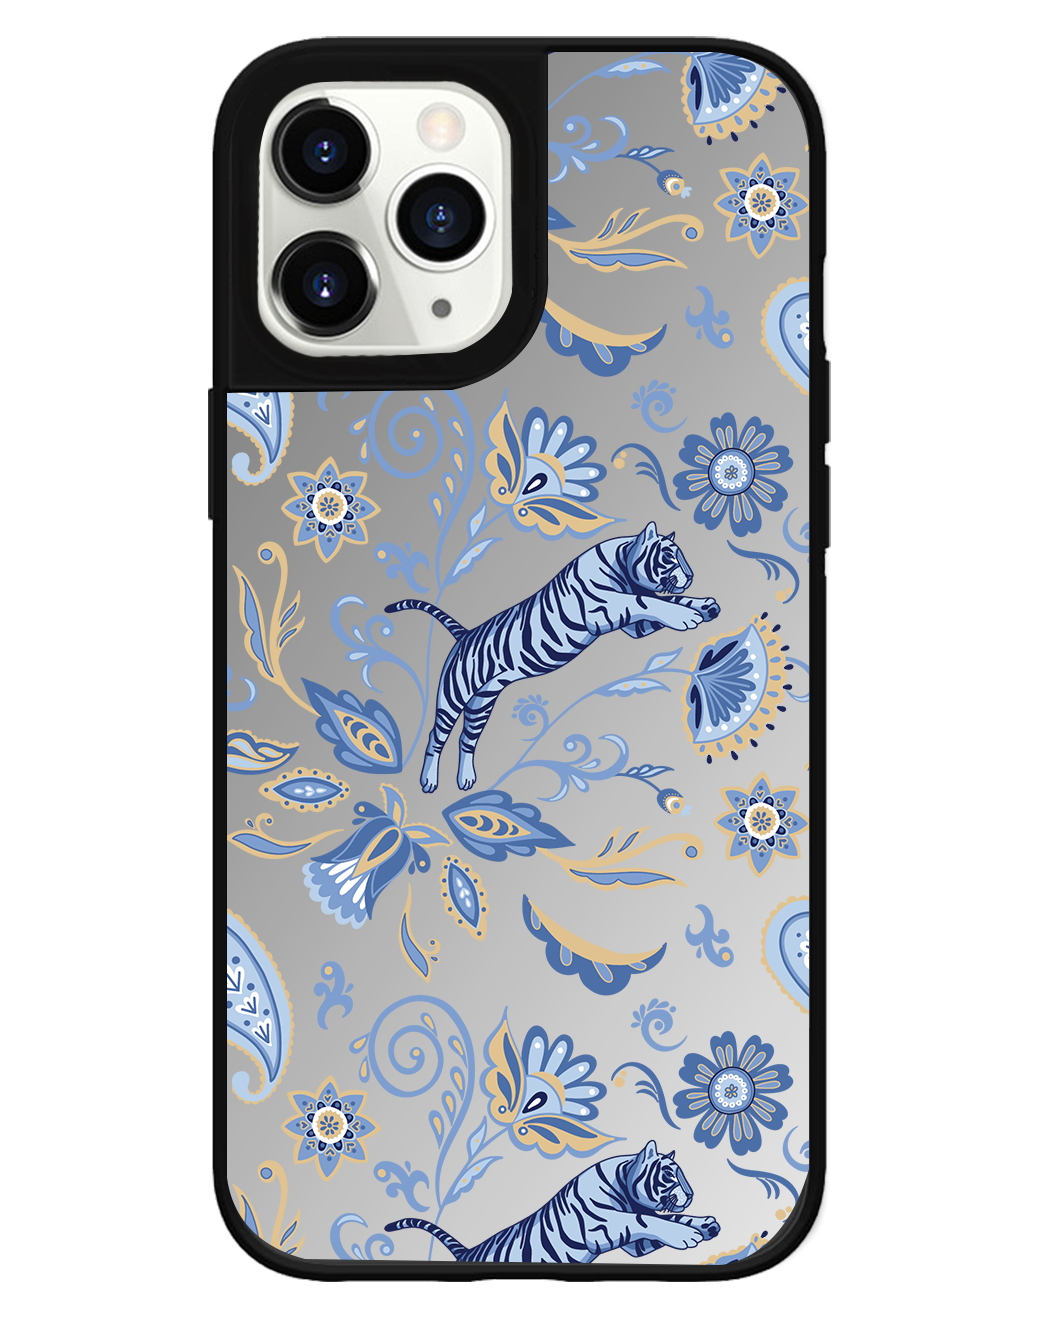 iPhone Mirror Grip Case - Tiger & Floral